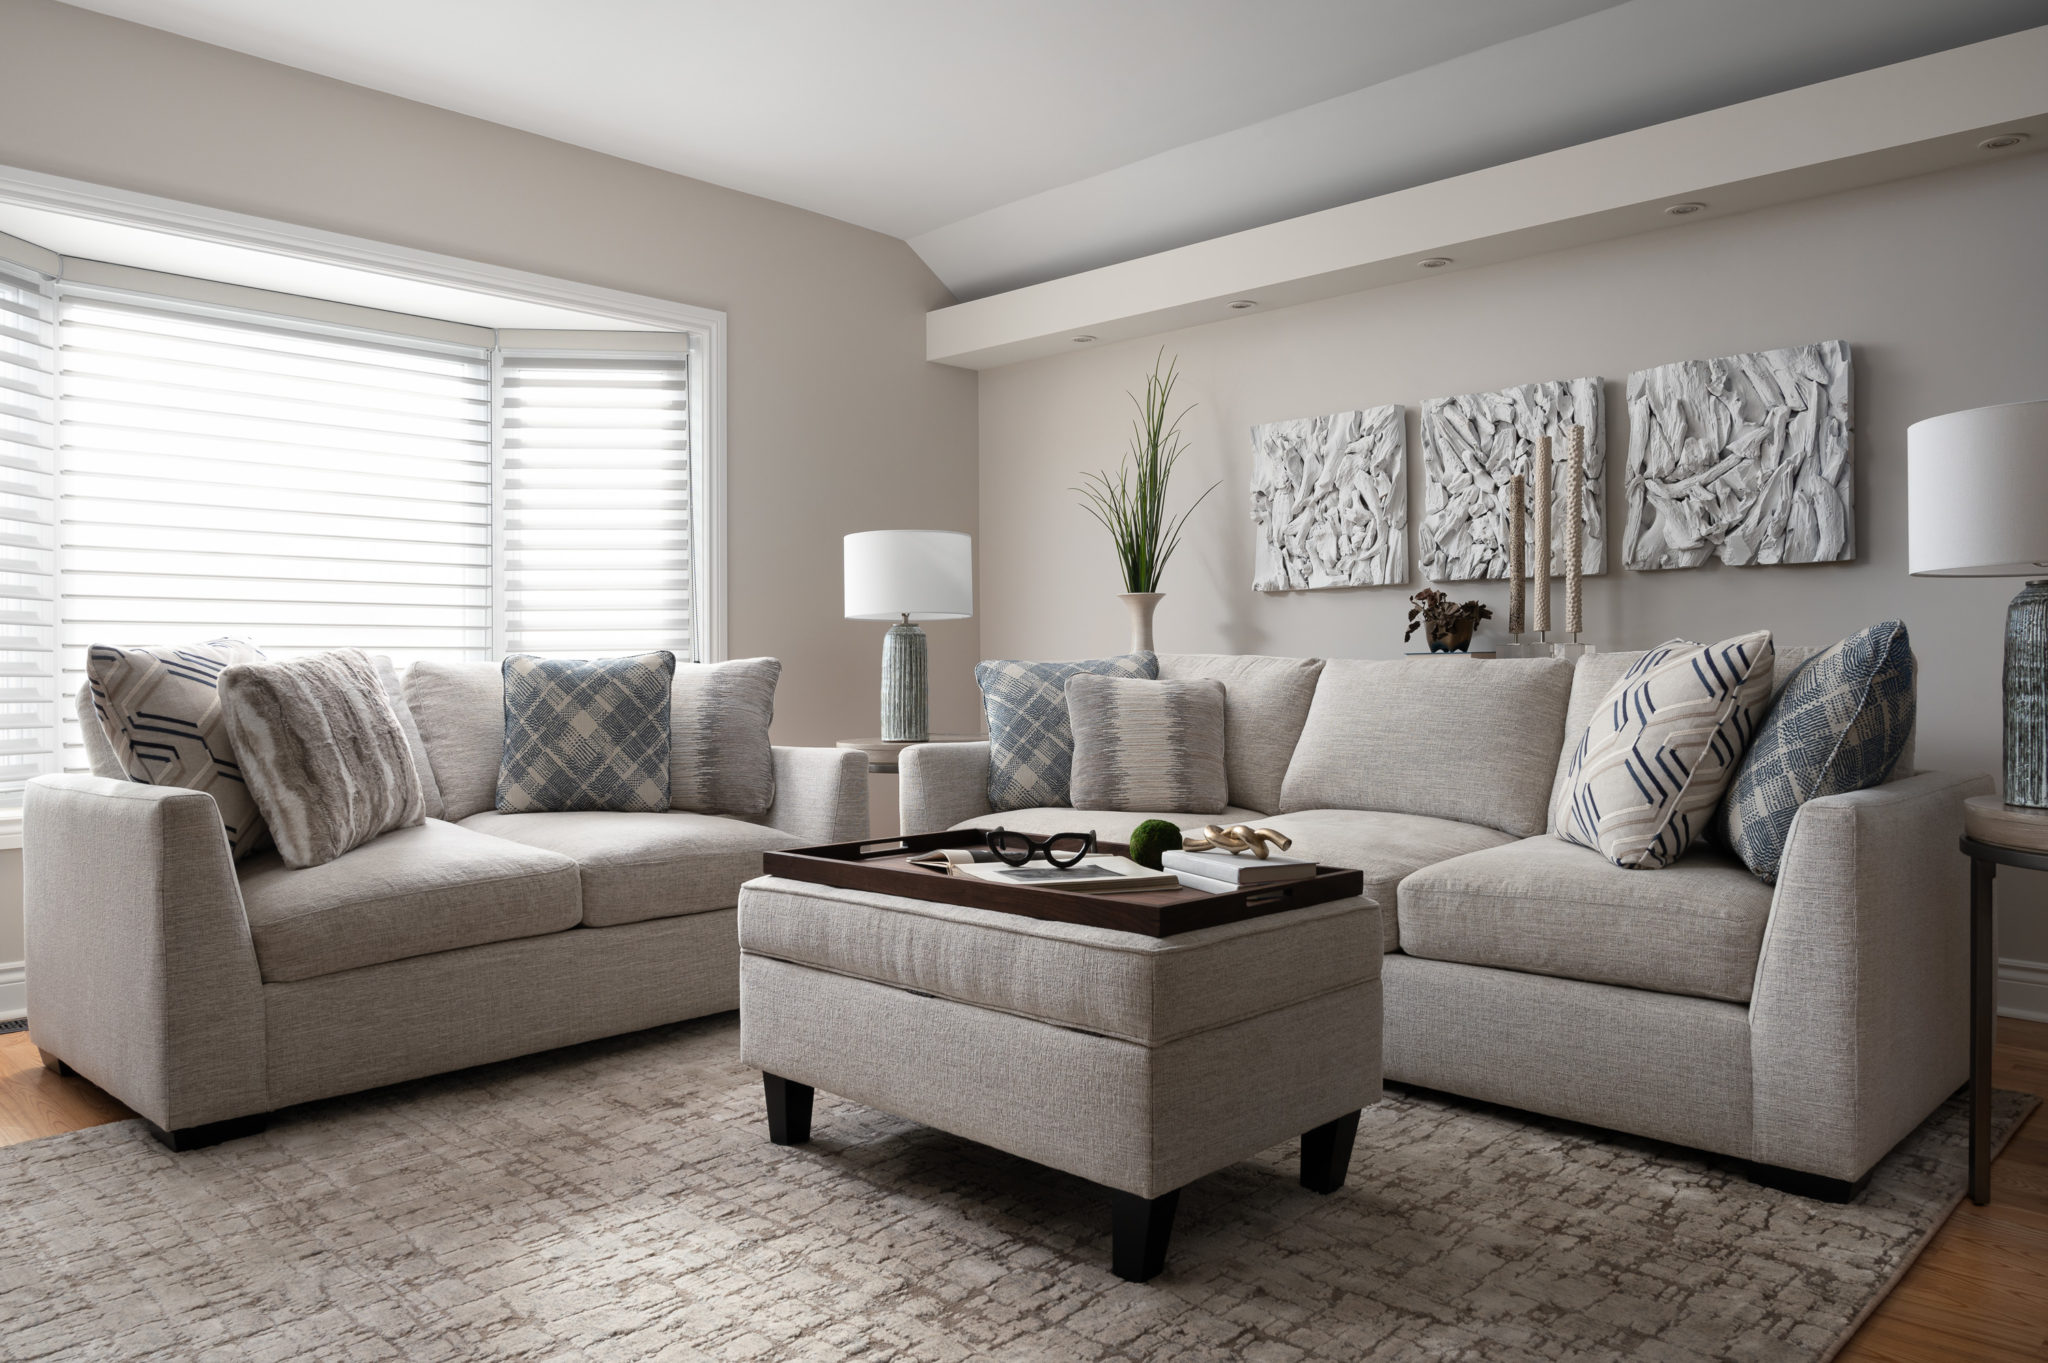 Grey walls, cream and grey upholstered furniture, natural, layered textures.